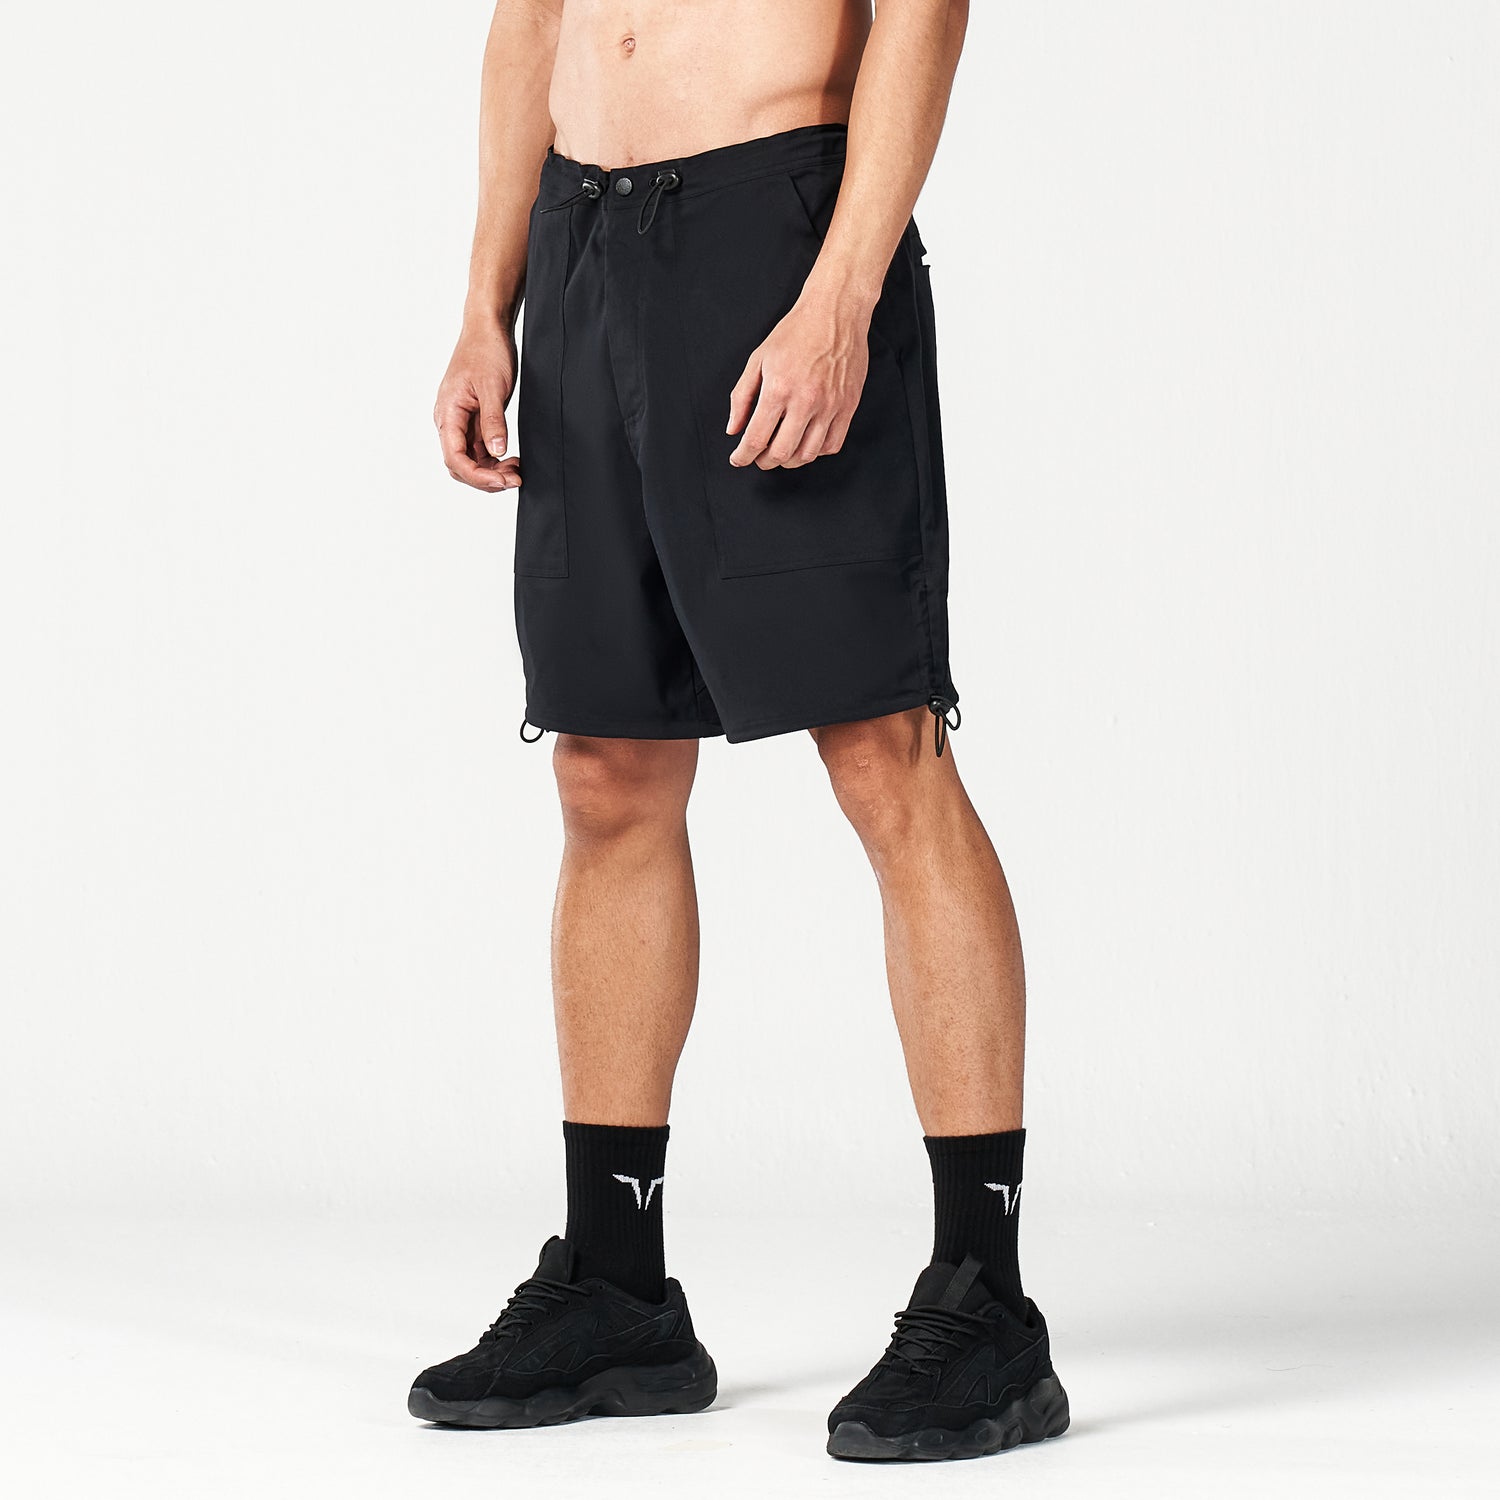 squatwolf-gym-wear-code-smart-shorts-black-workout-short-for-men